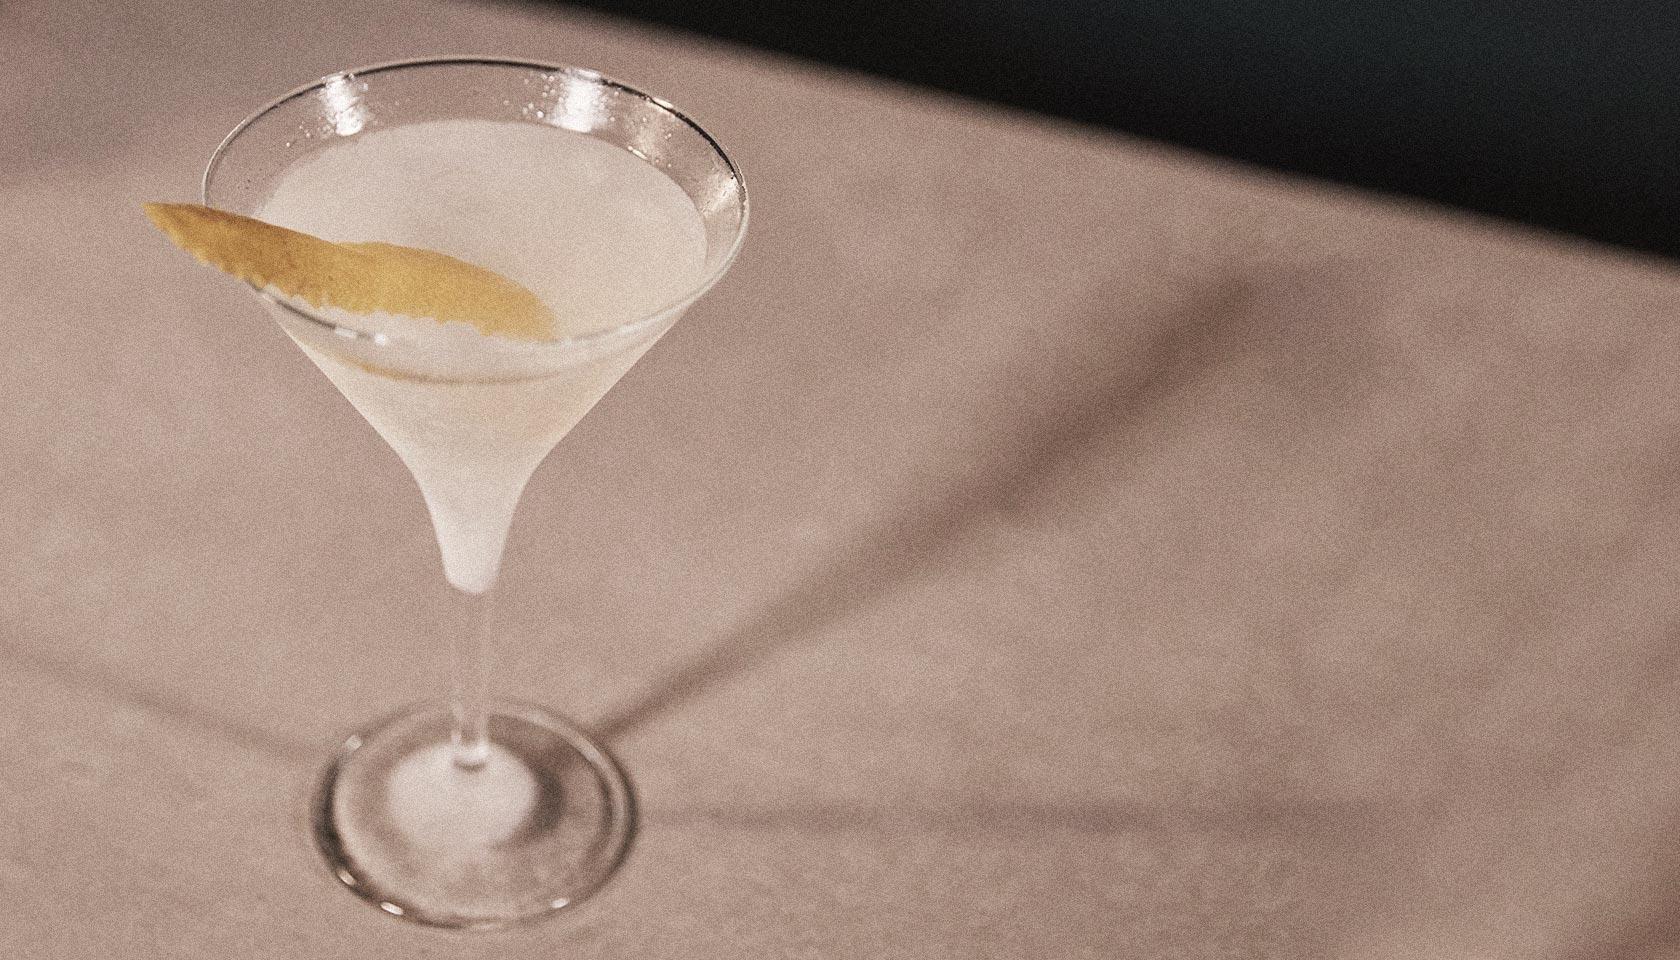 Venetia Martini / Cocktail